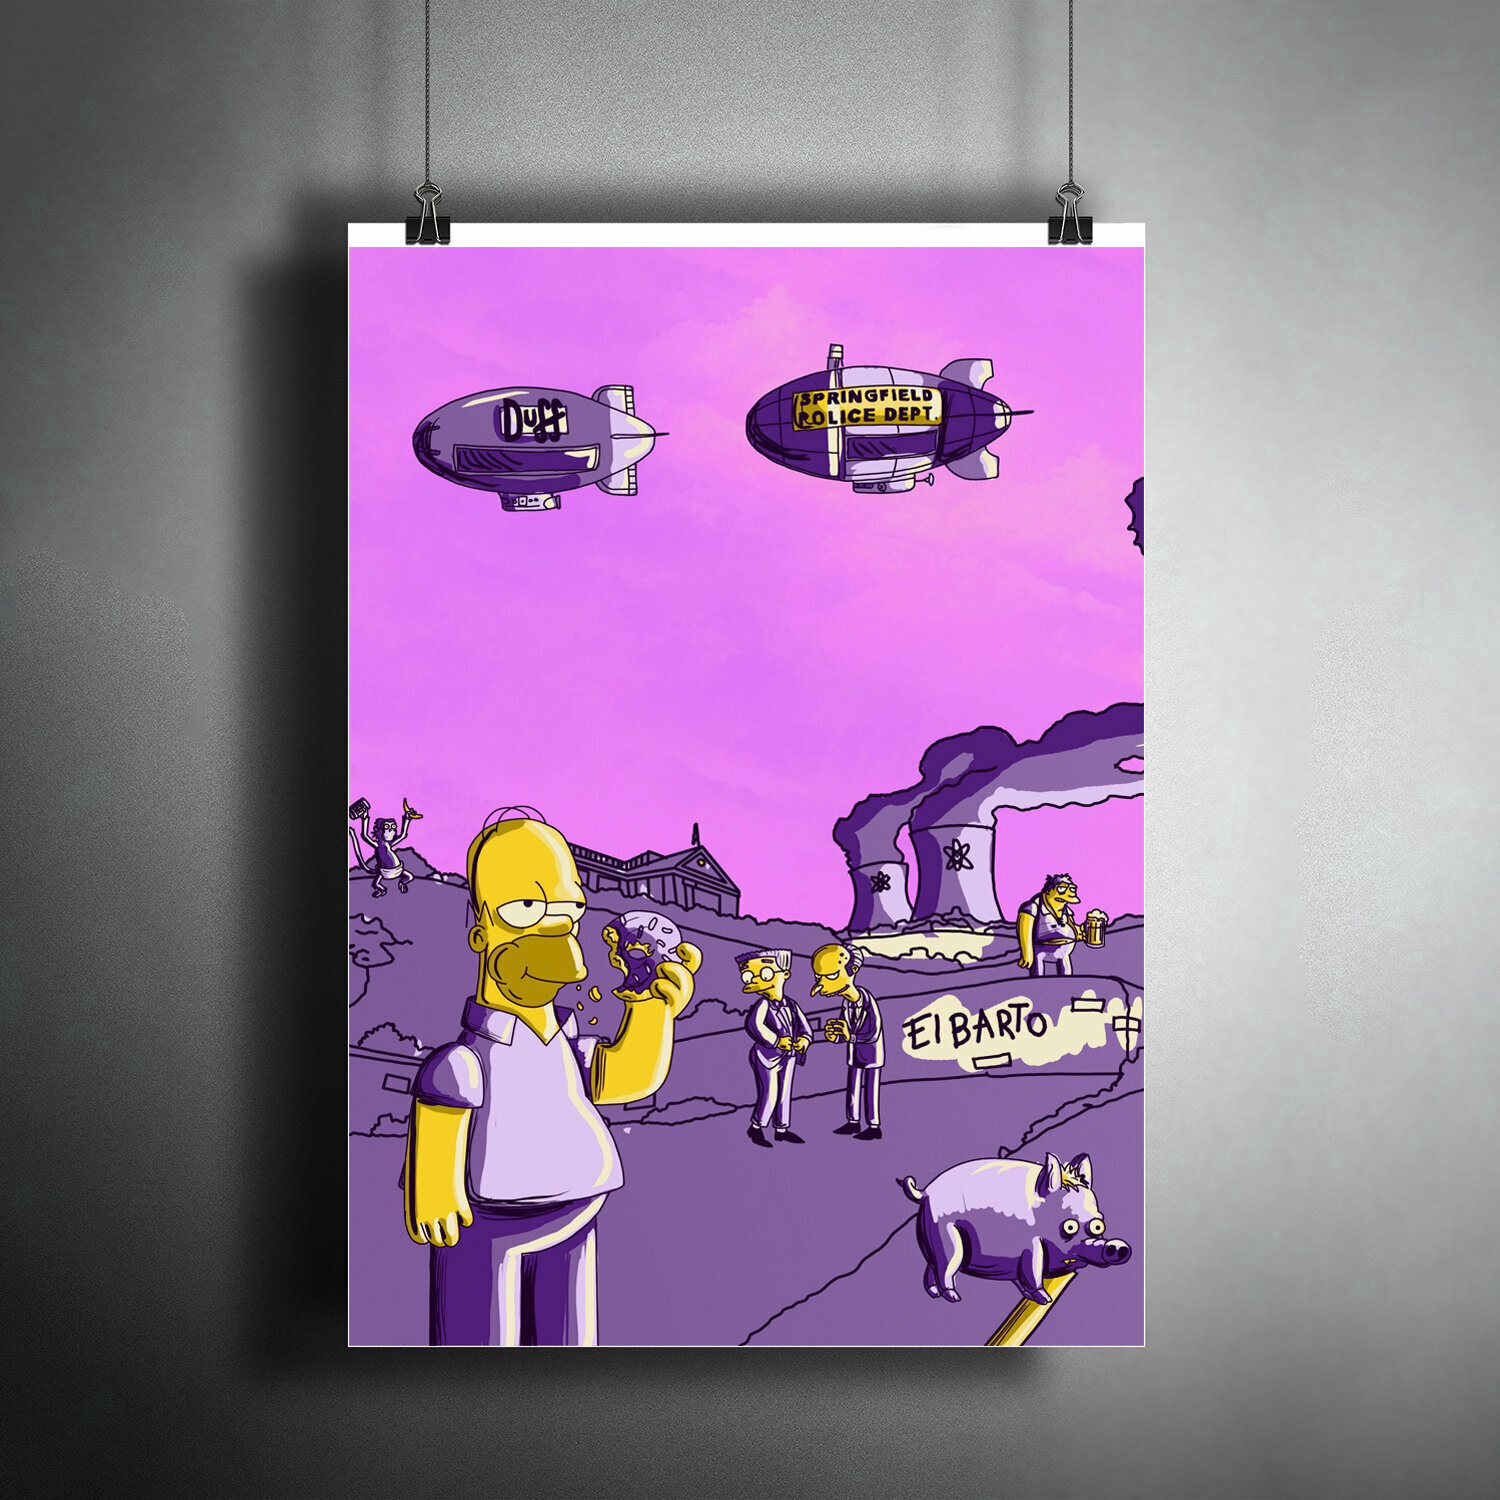 Постер плакат для интерьера "Мультсериал: Симпсоны (The Simpsons). Гомер, Мардж, Лиза, Барт, Мэгги" / A3 (297 x 420 мм)